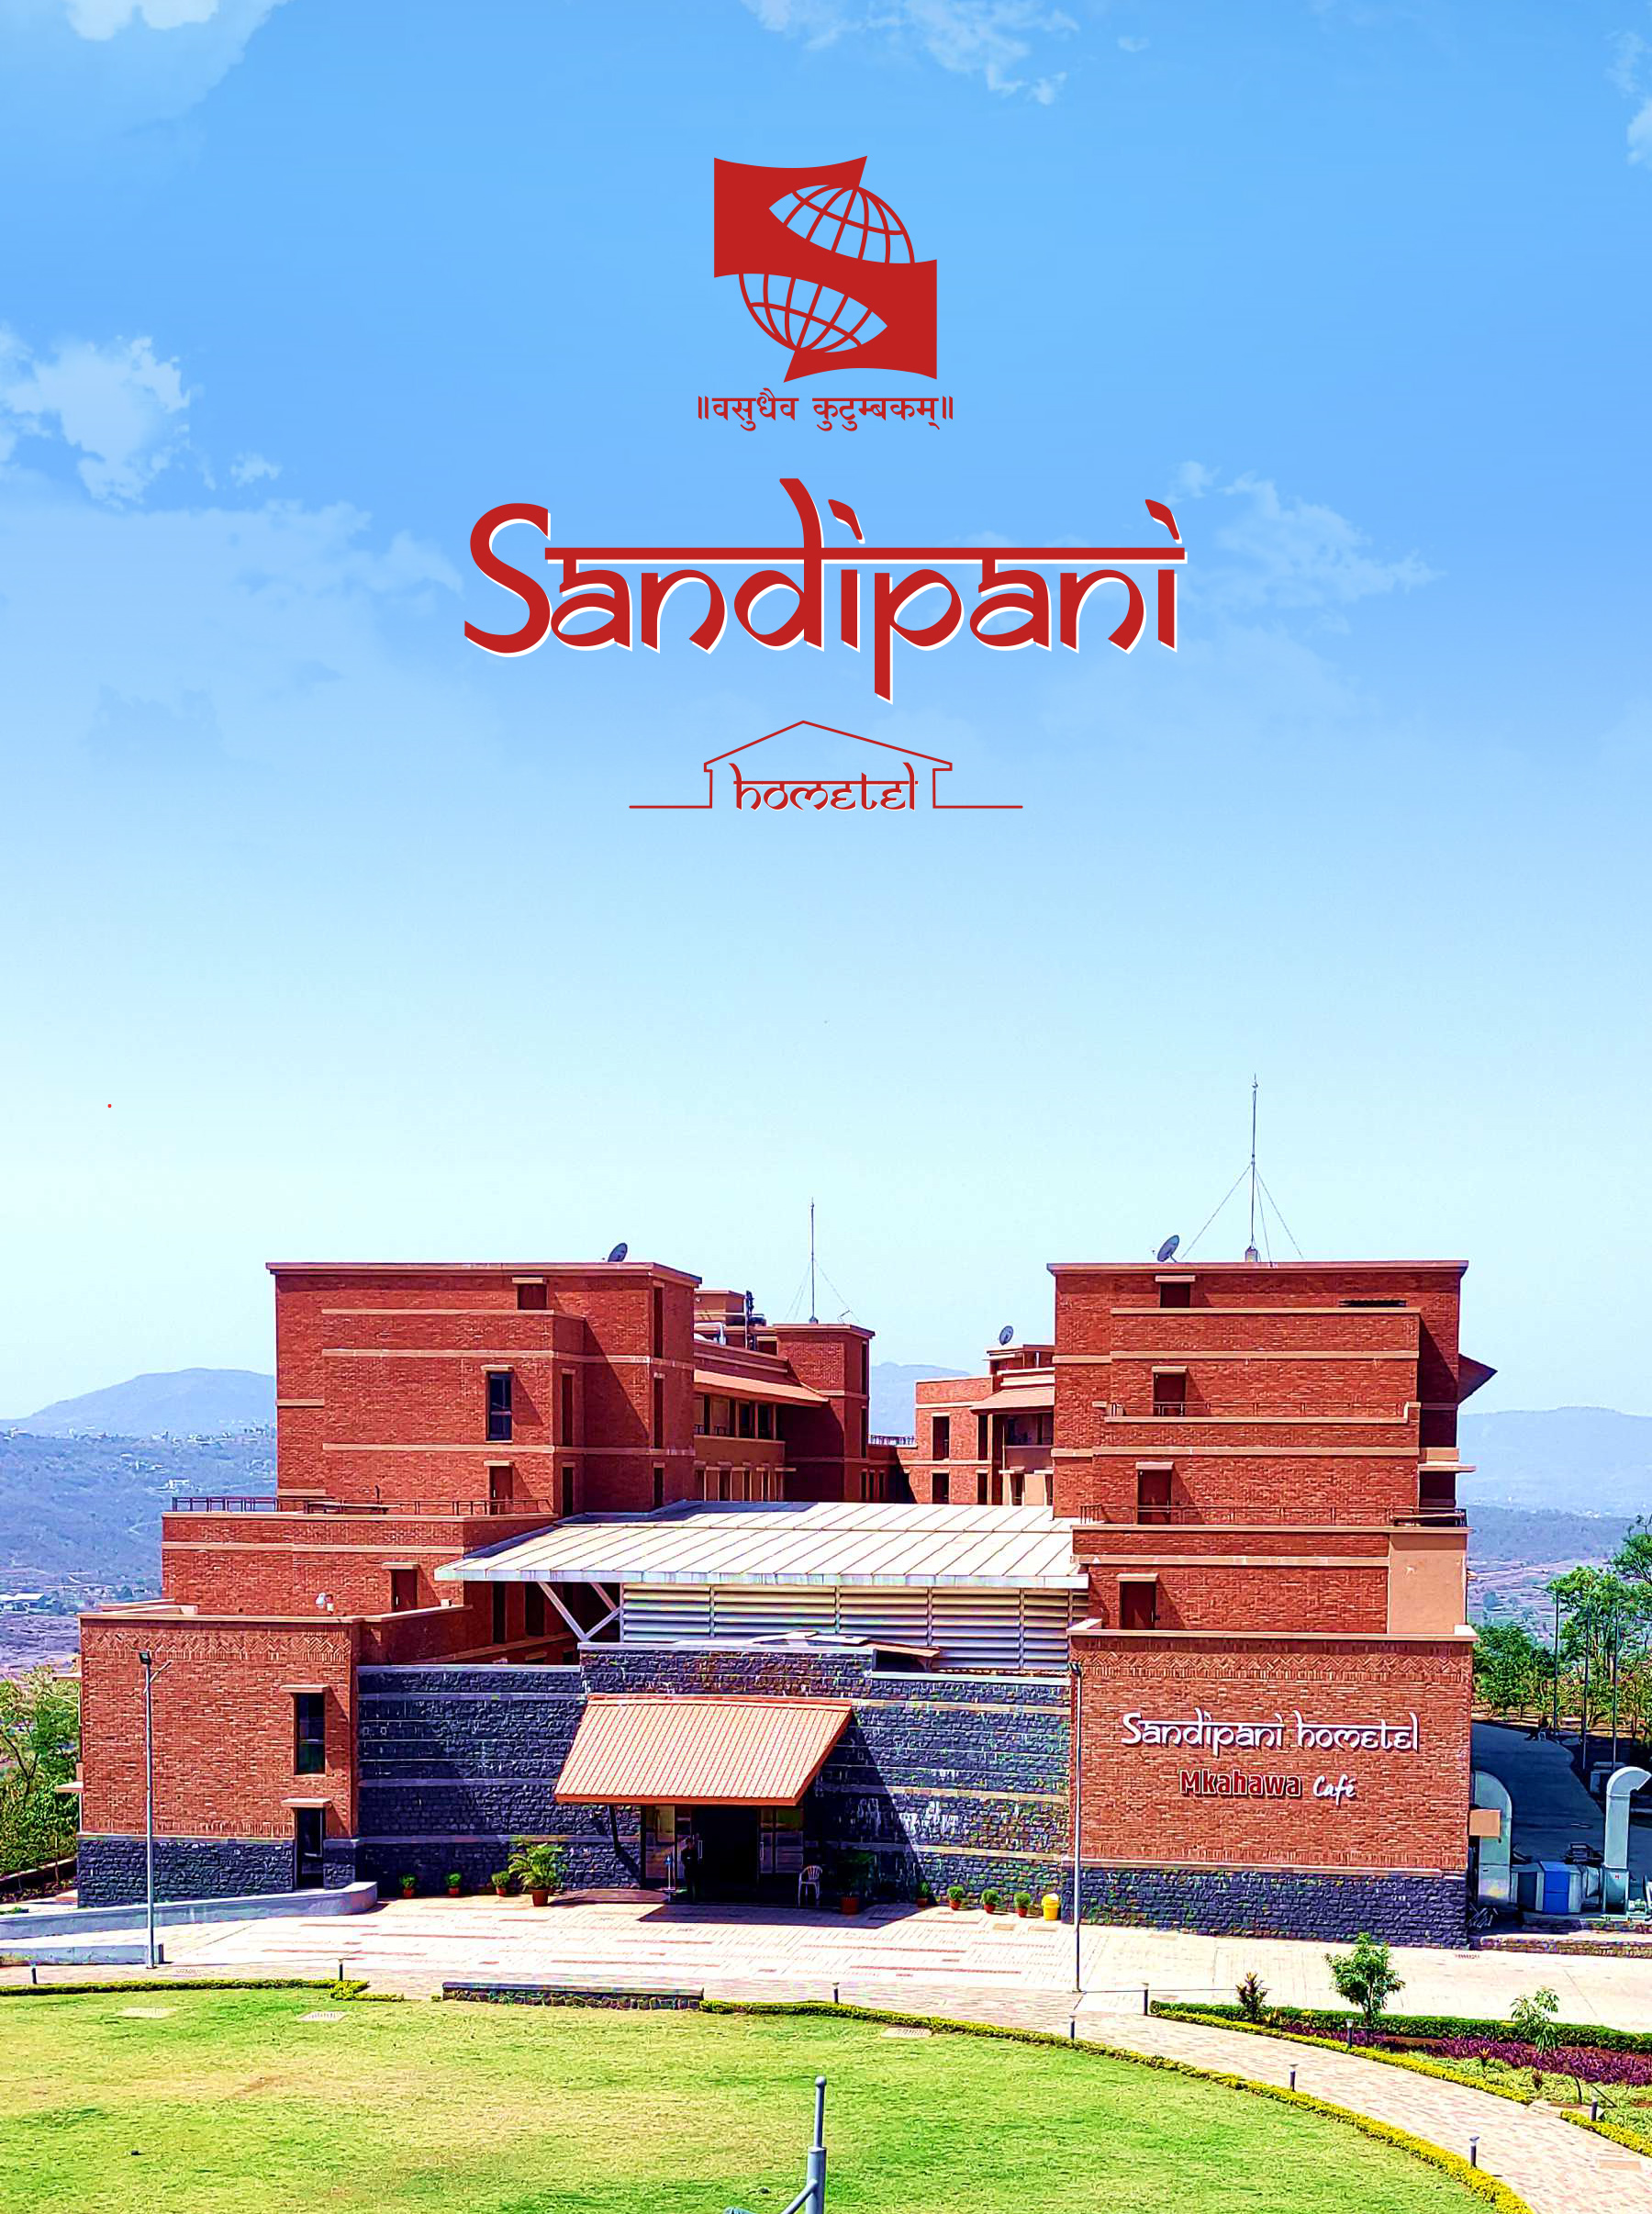 Sandipani Hometel image